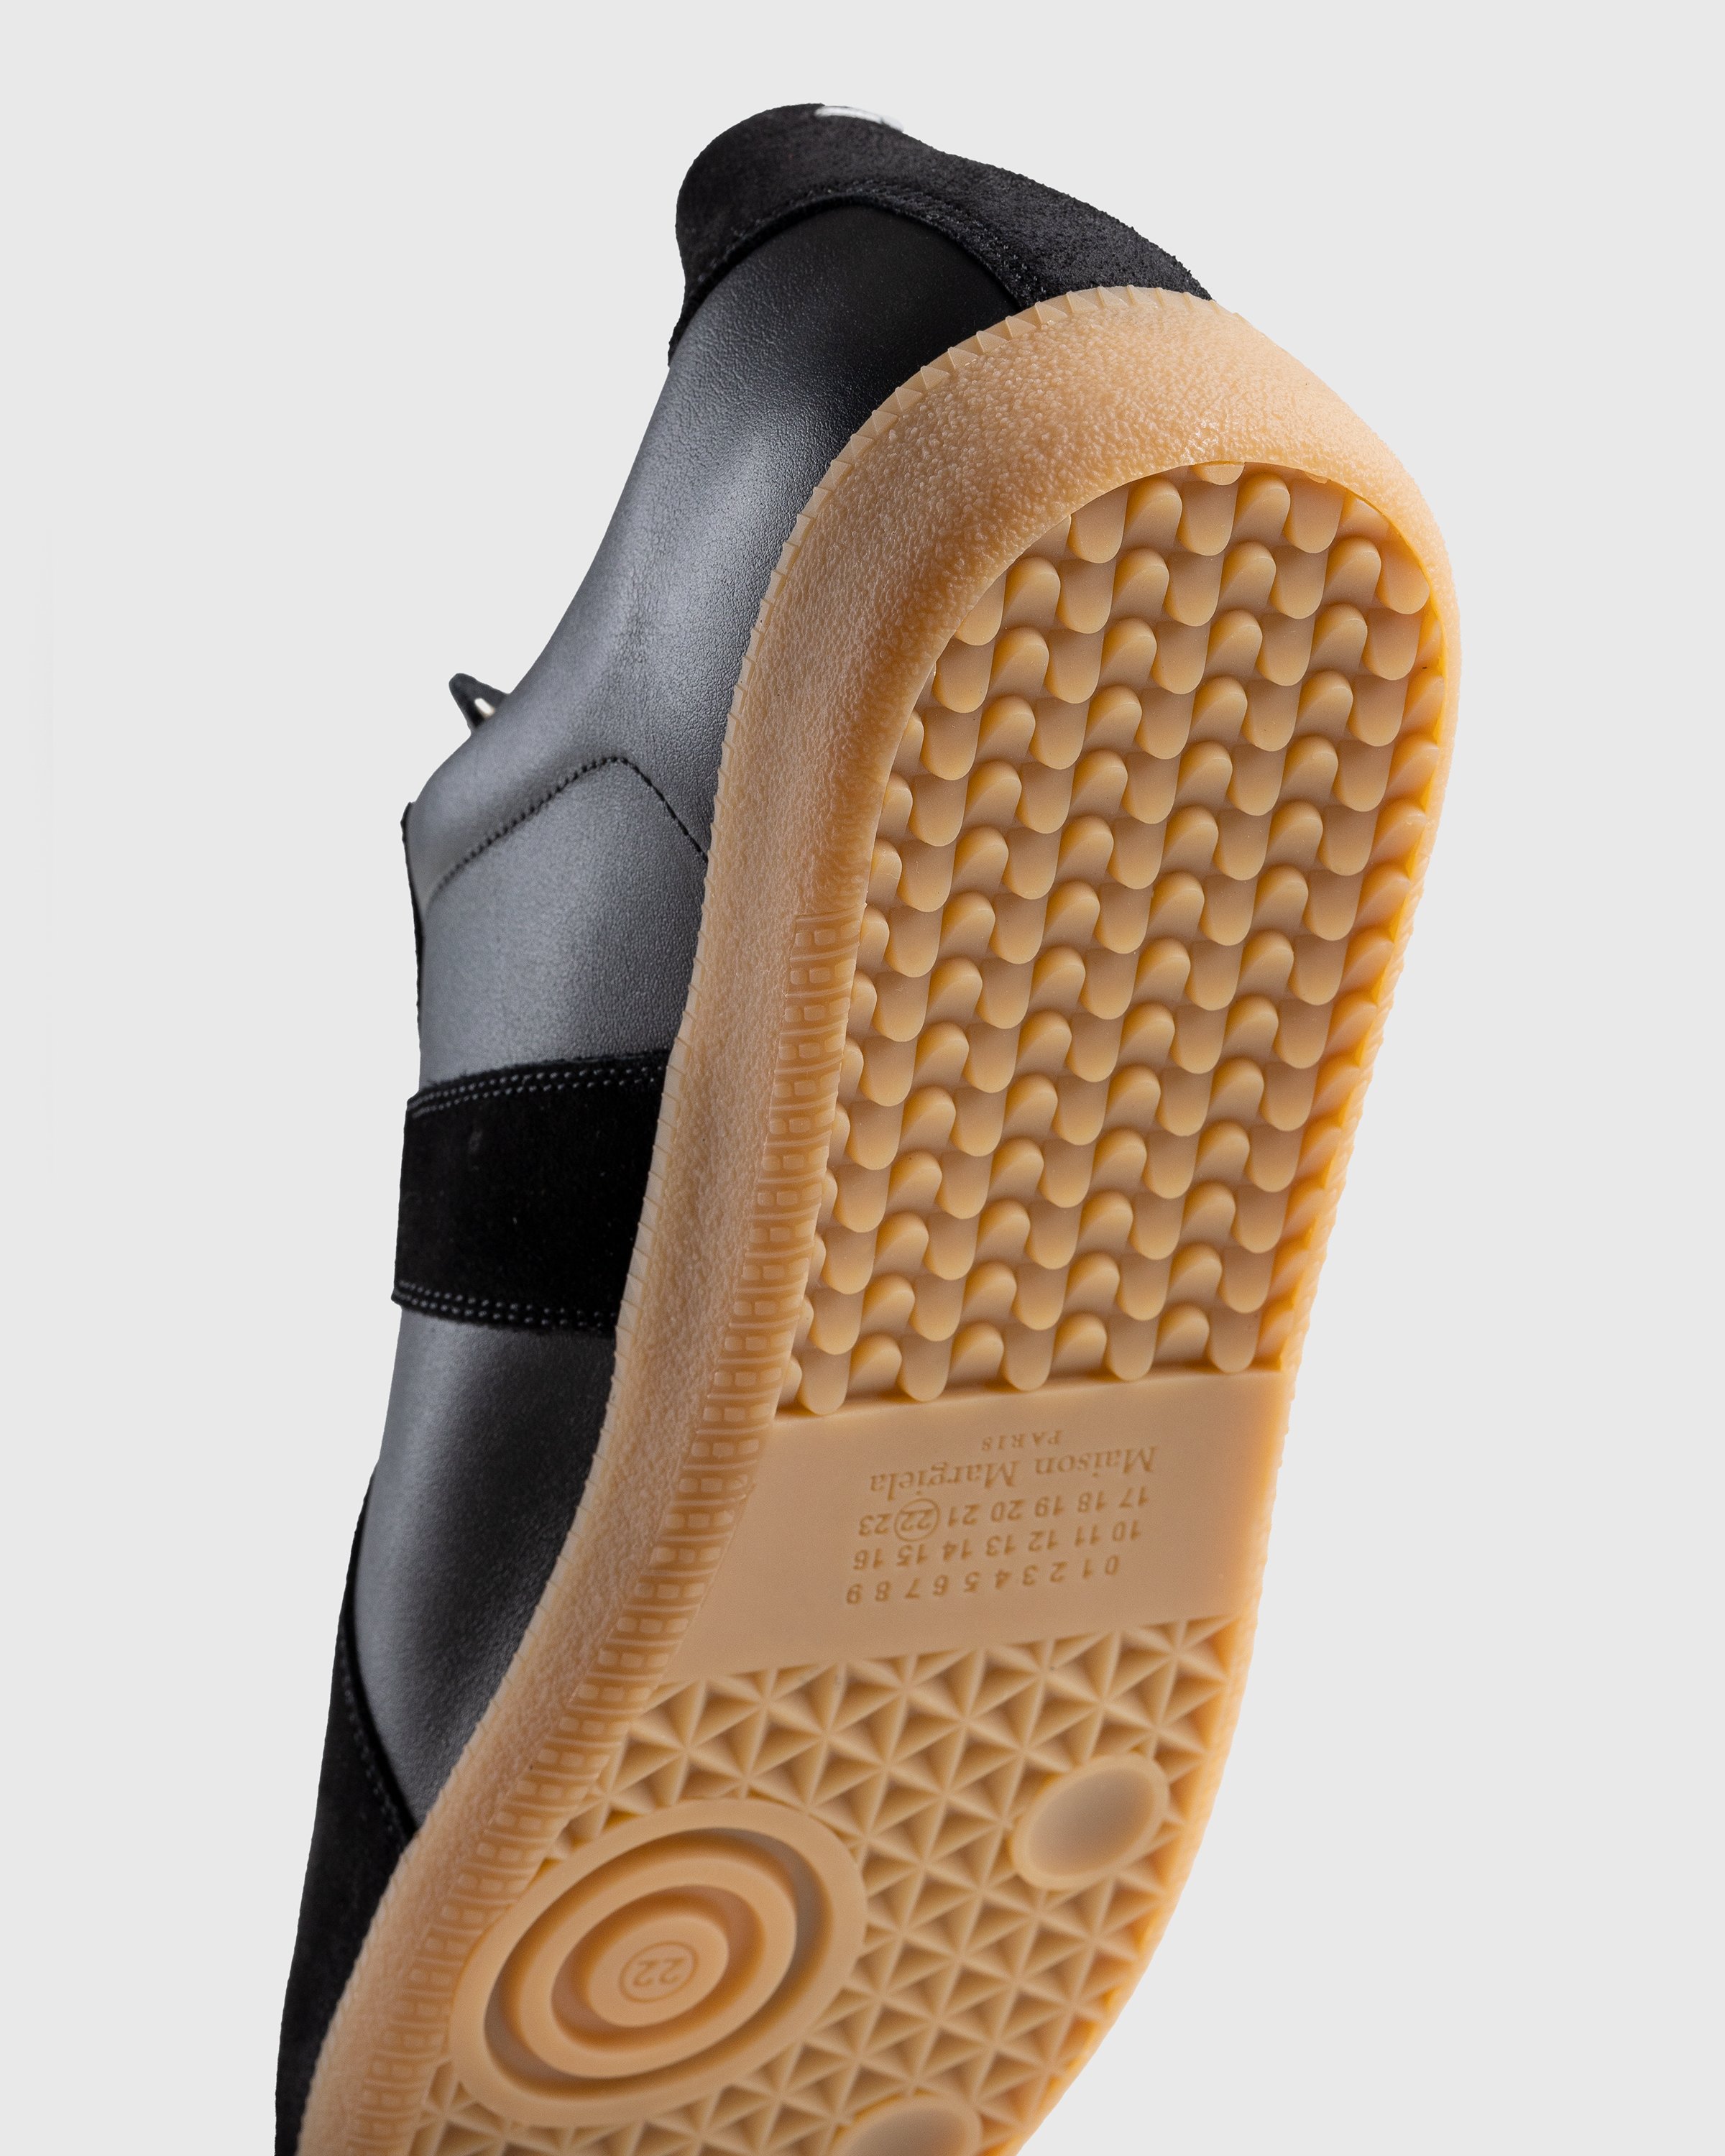 Maison Margiela - Leather Replica Sneakers Black - Footwear - Black - Image 6